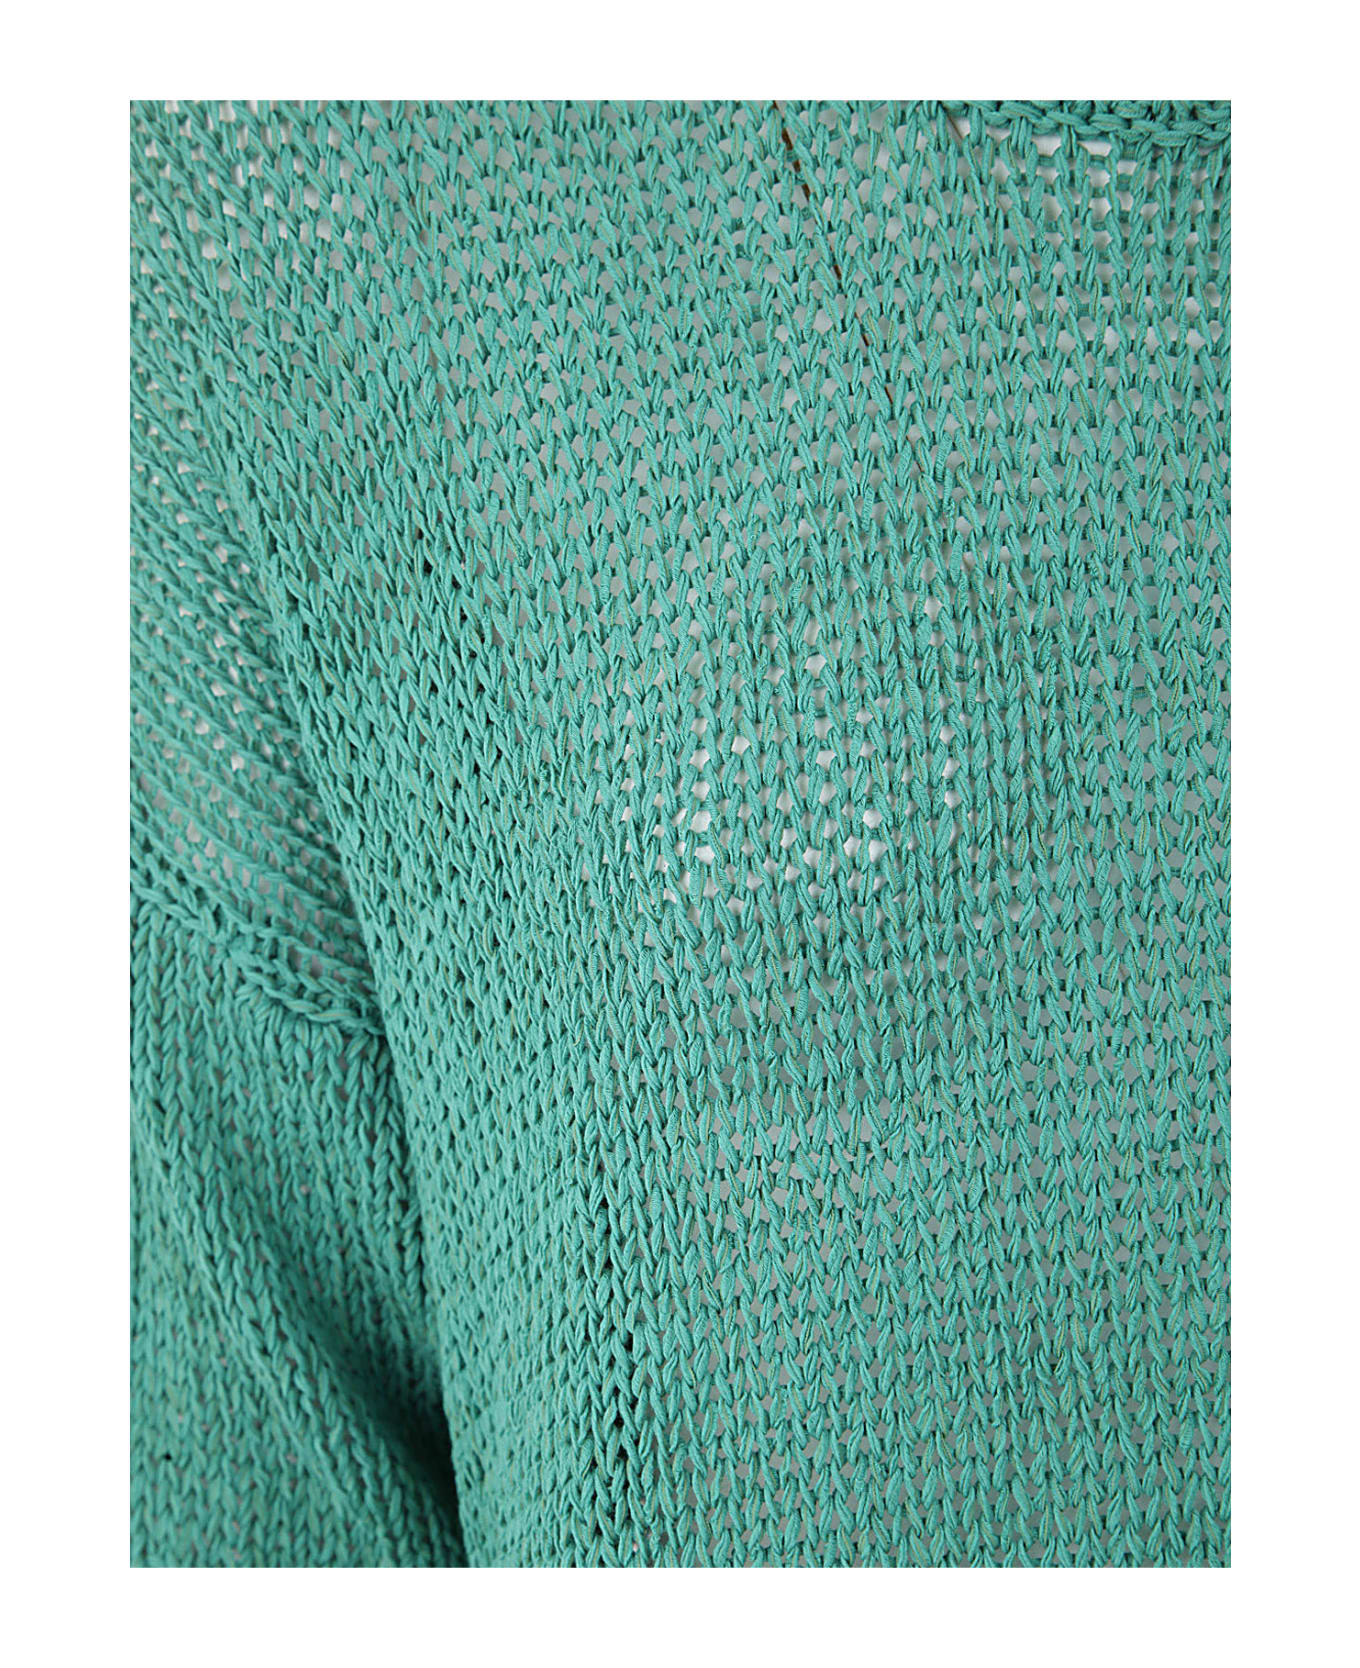 Nuur Short Sleeve Boxy Pullover - Emerald ニットウェア